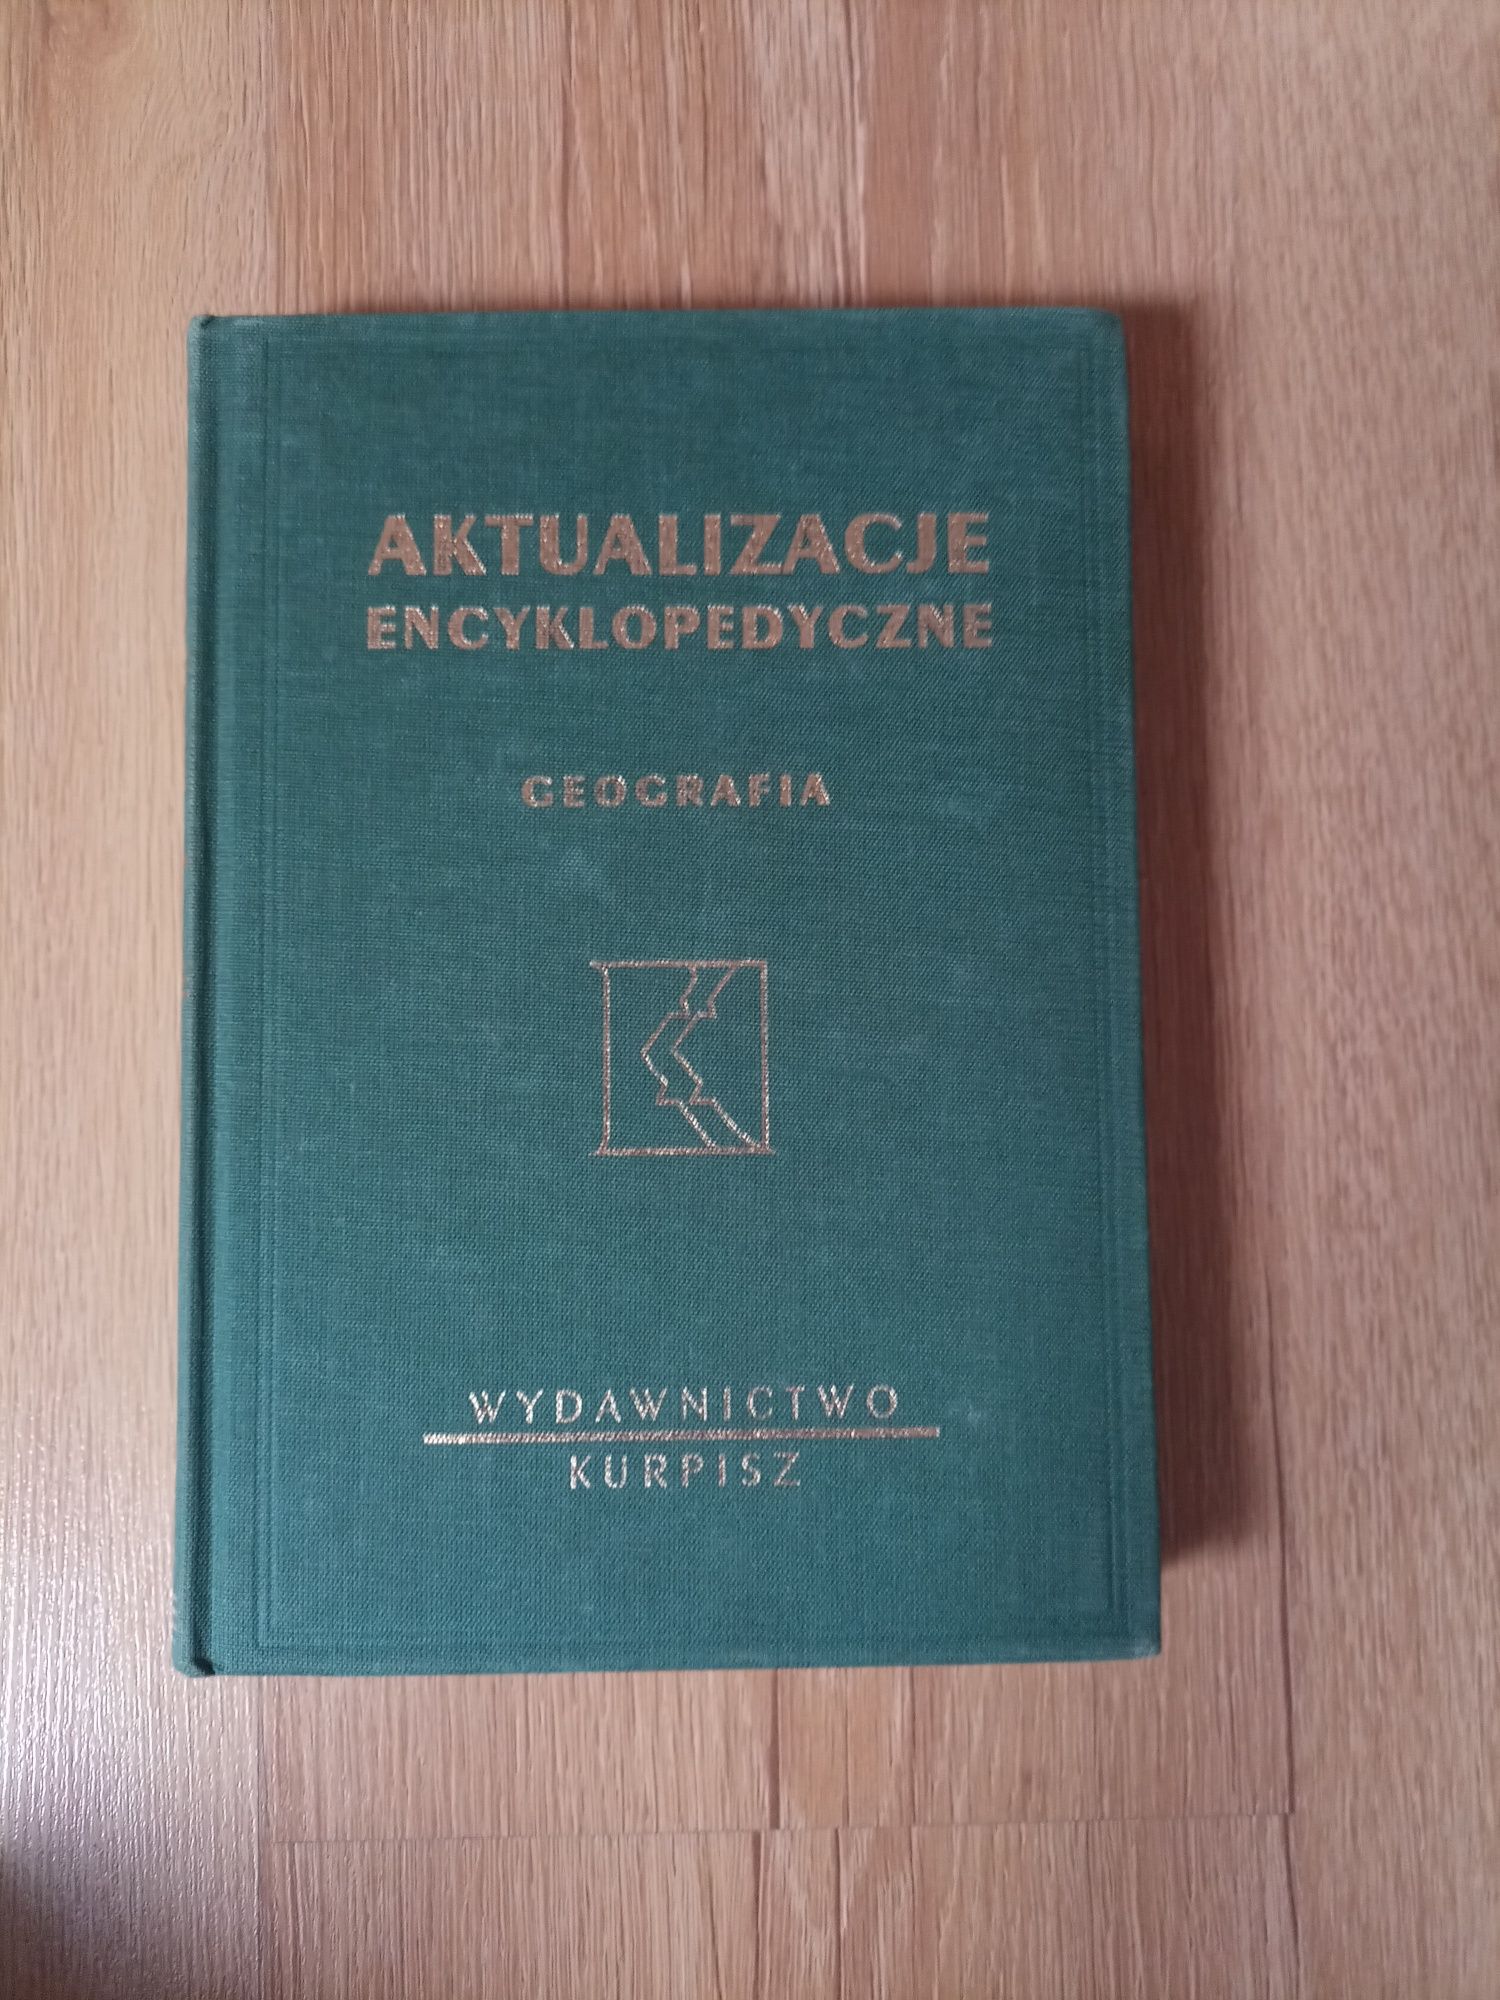 Encyklopedia Gutenberga aktualizacje